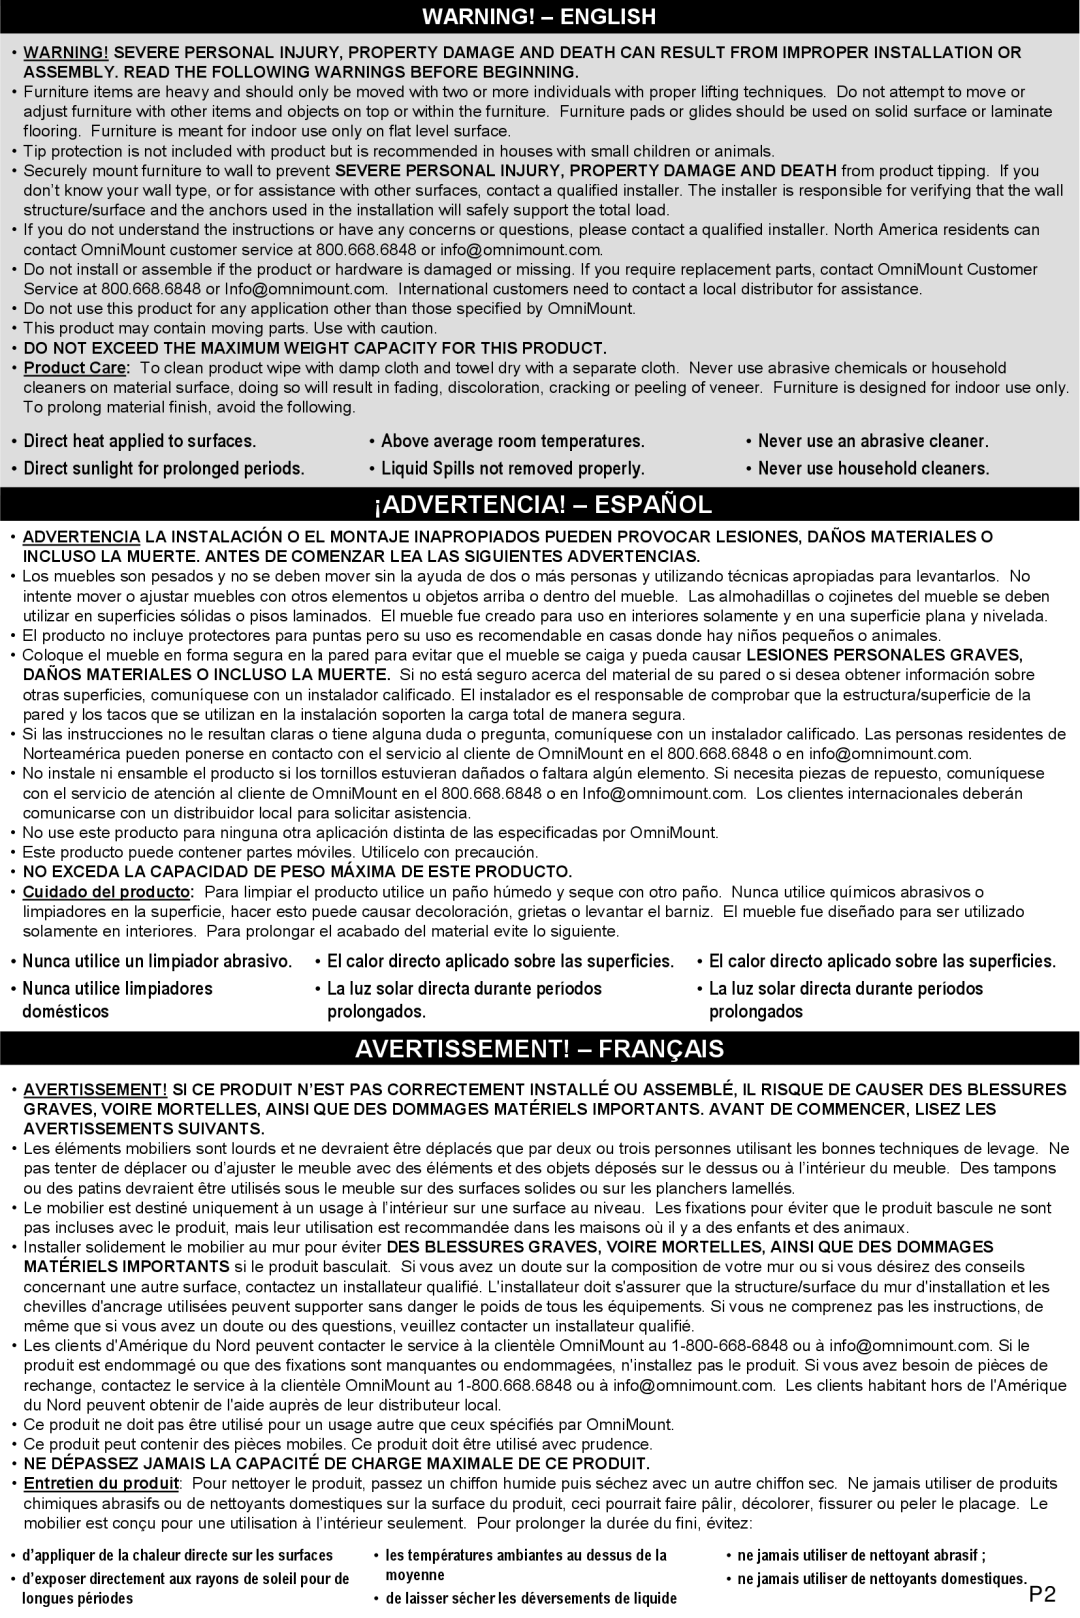 Omnimount RSF instruction manual ¡Advertencia! – Español, Avertissement! – Français, Warning! – English 